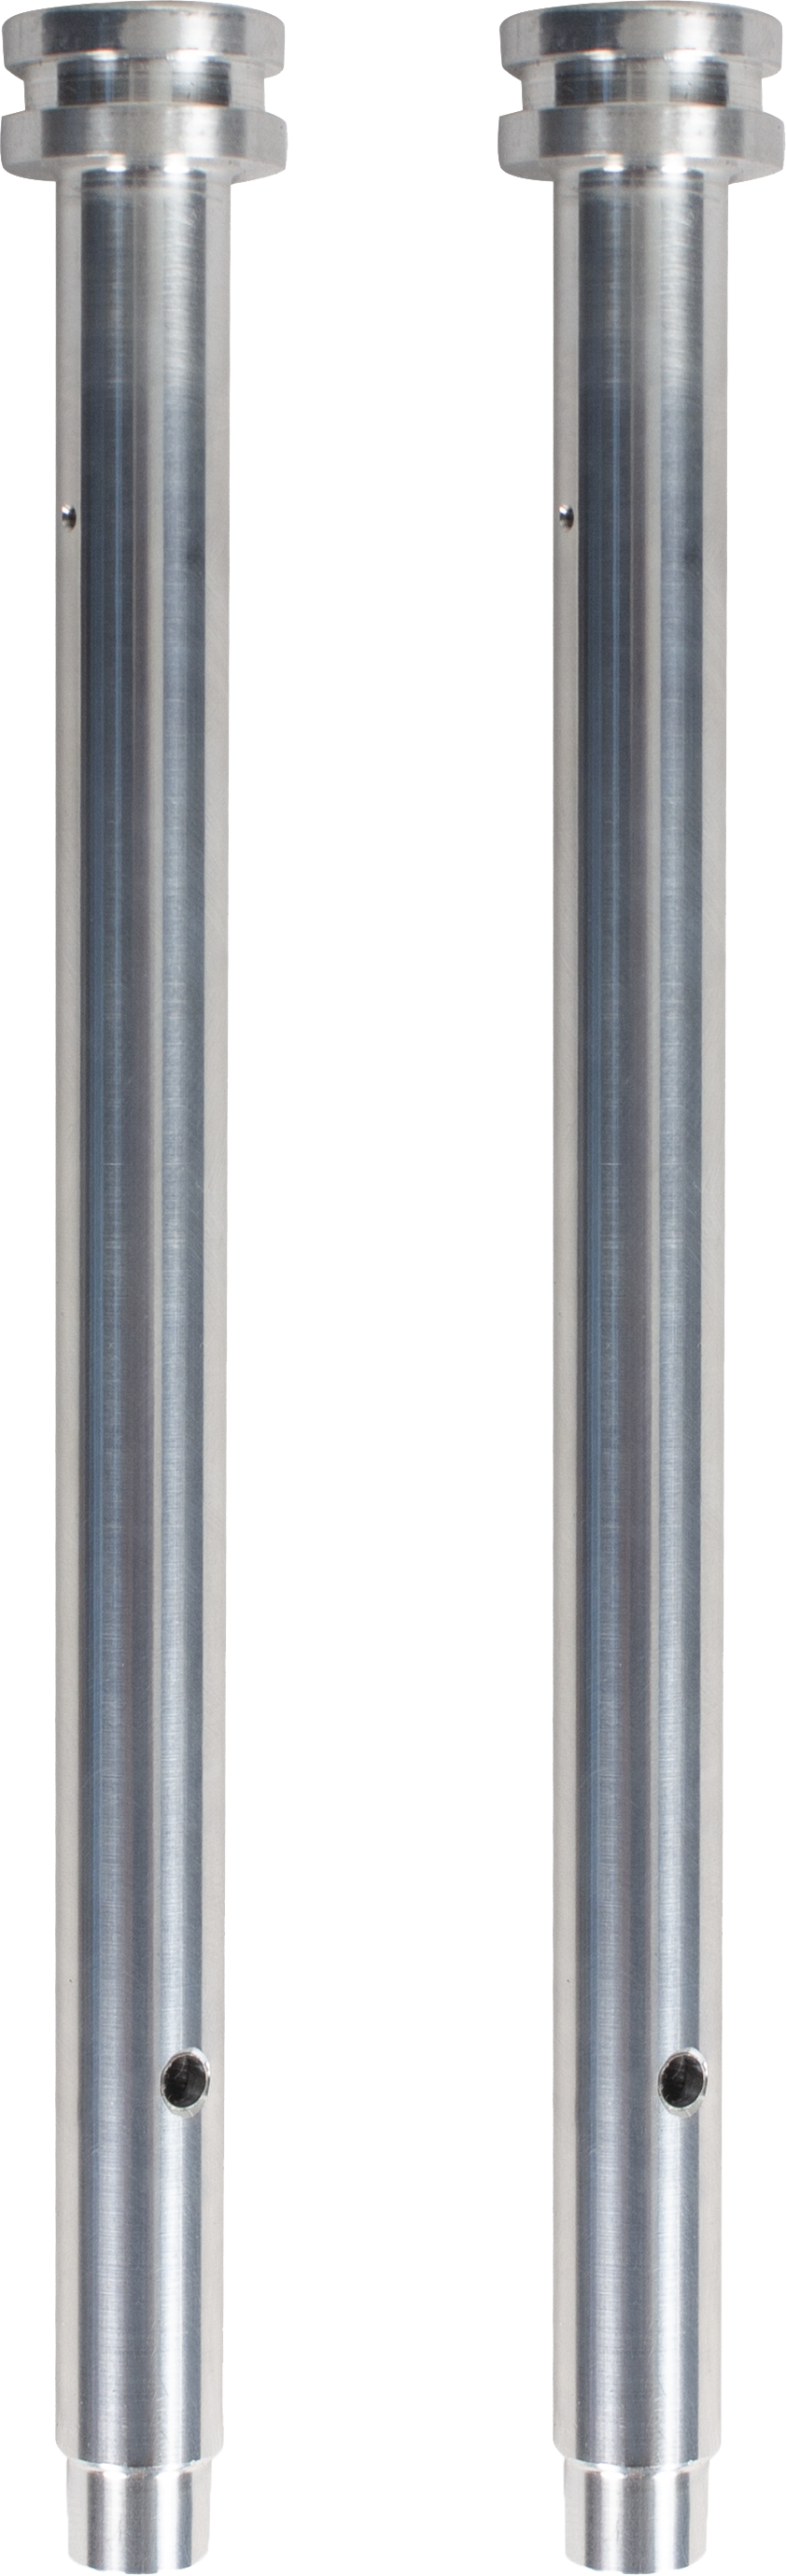 TBR Crf110 Klx110 Long Travel Damping Rods 022-6-53